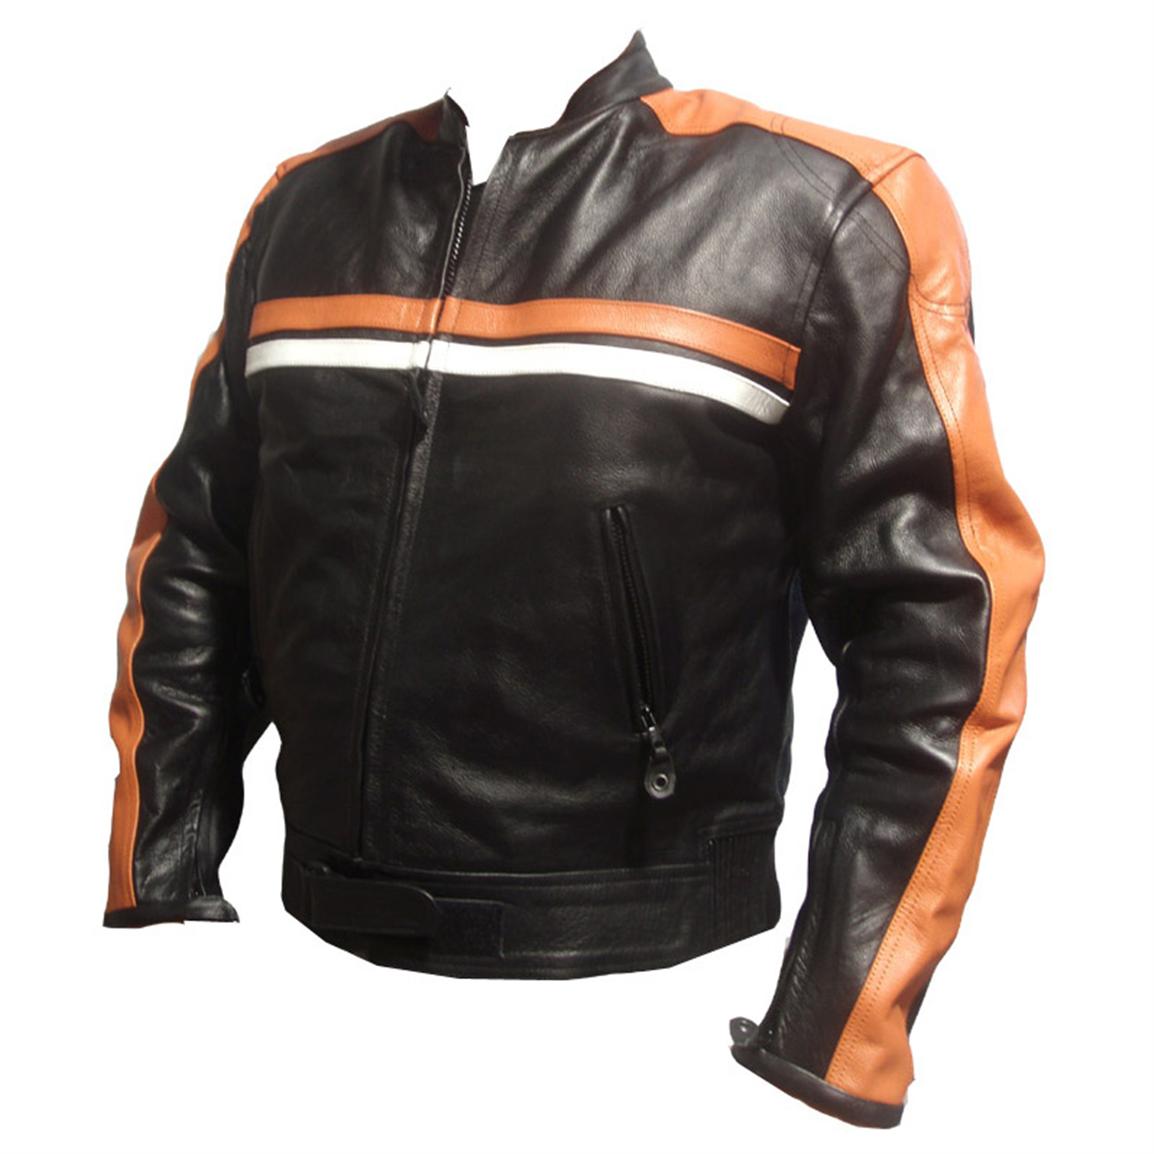 MAS® Ninja Jacket - 161274, Insulated Jackets & Coats at Sportsman's Guide